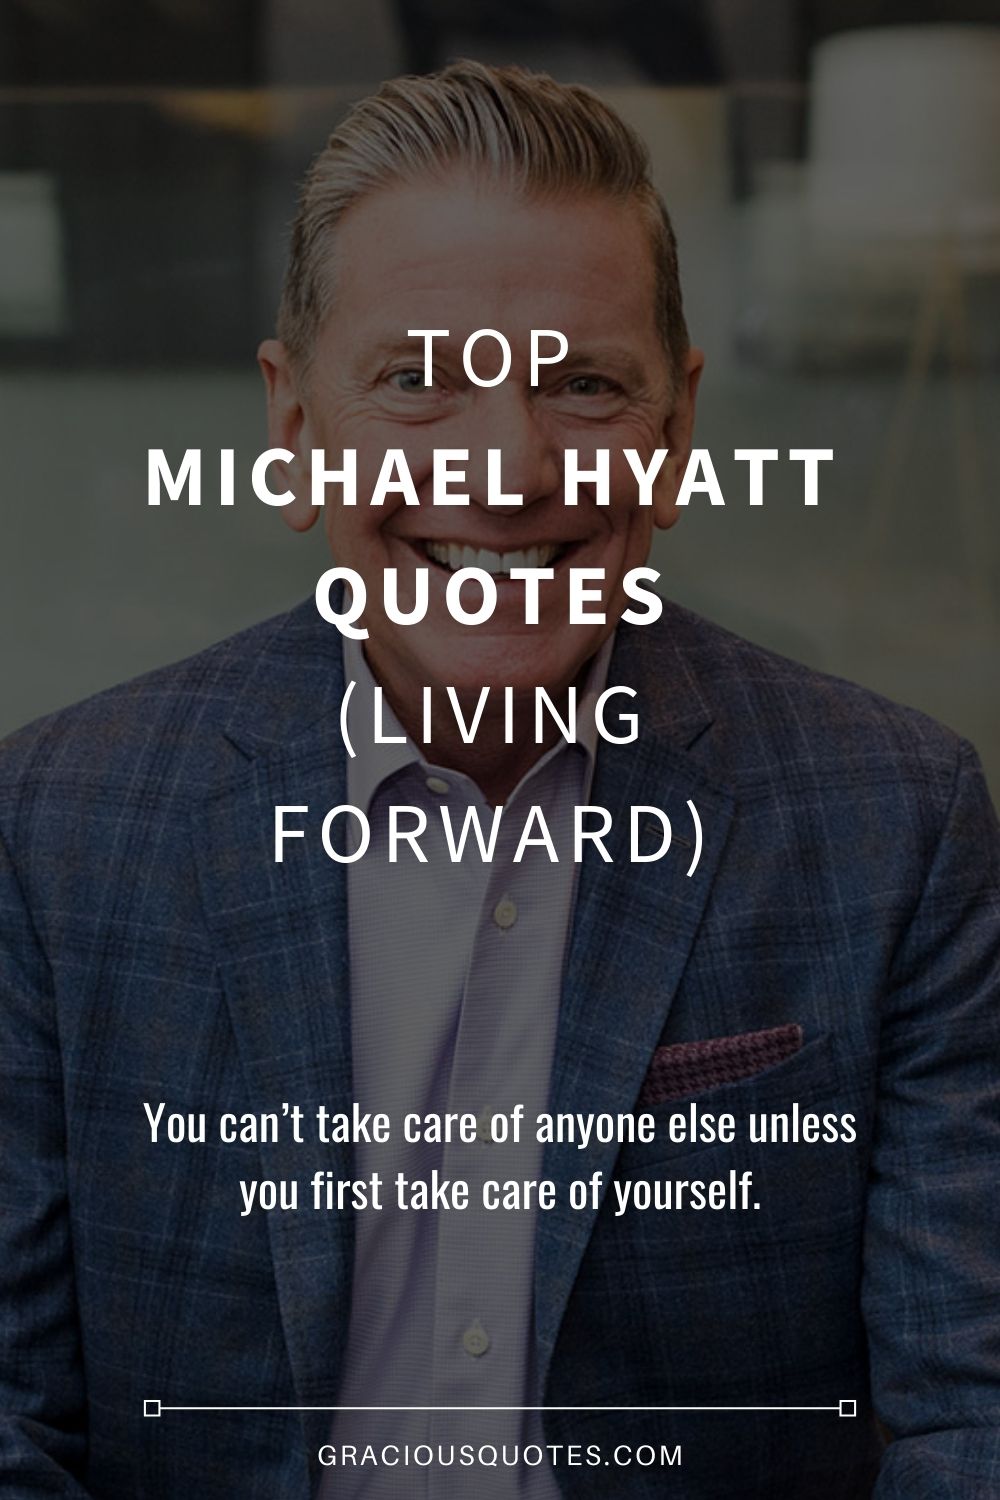 Top Michael Hyatt Quotes (LIVING FORWARD) - Gracious Quotes